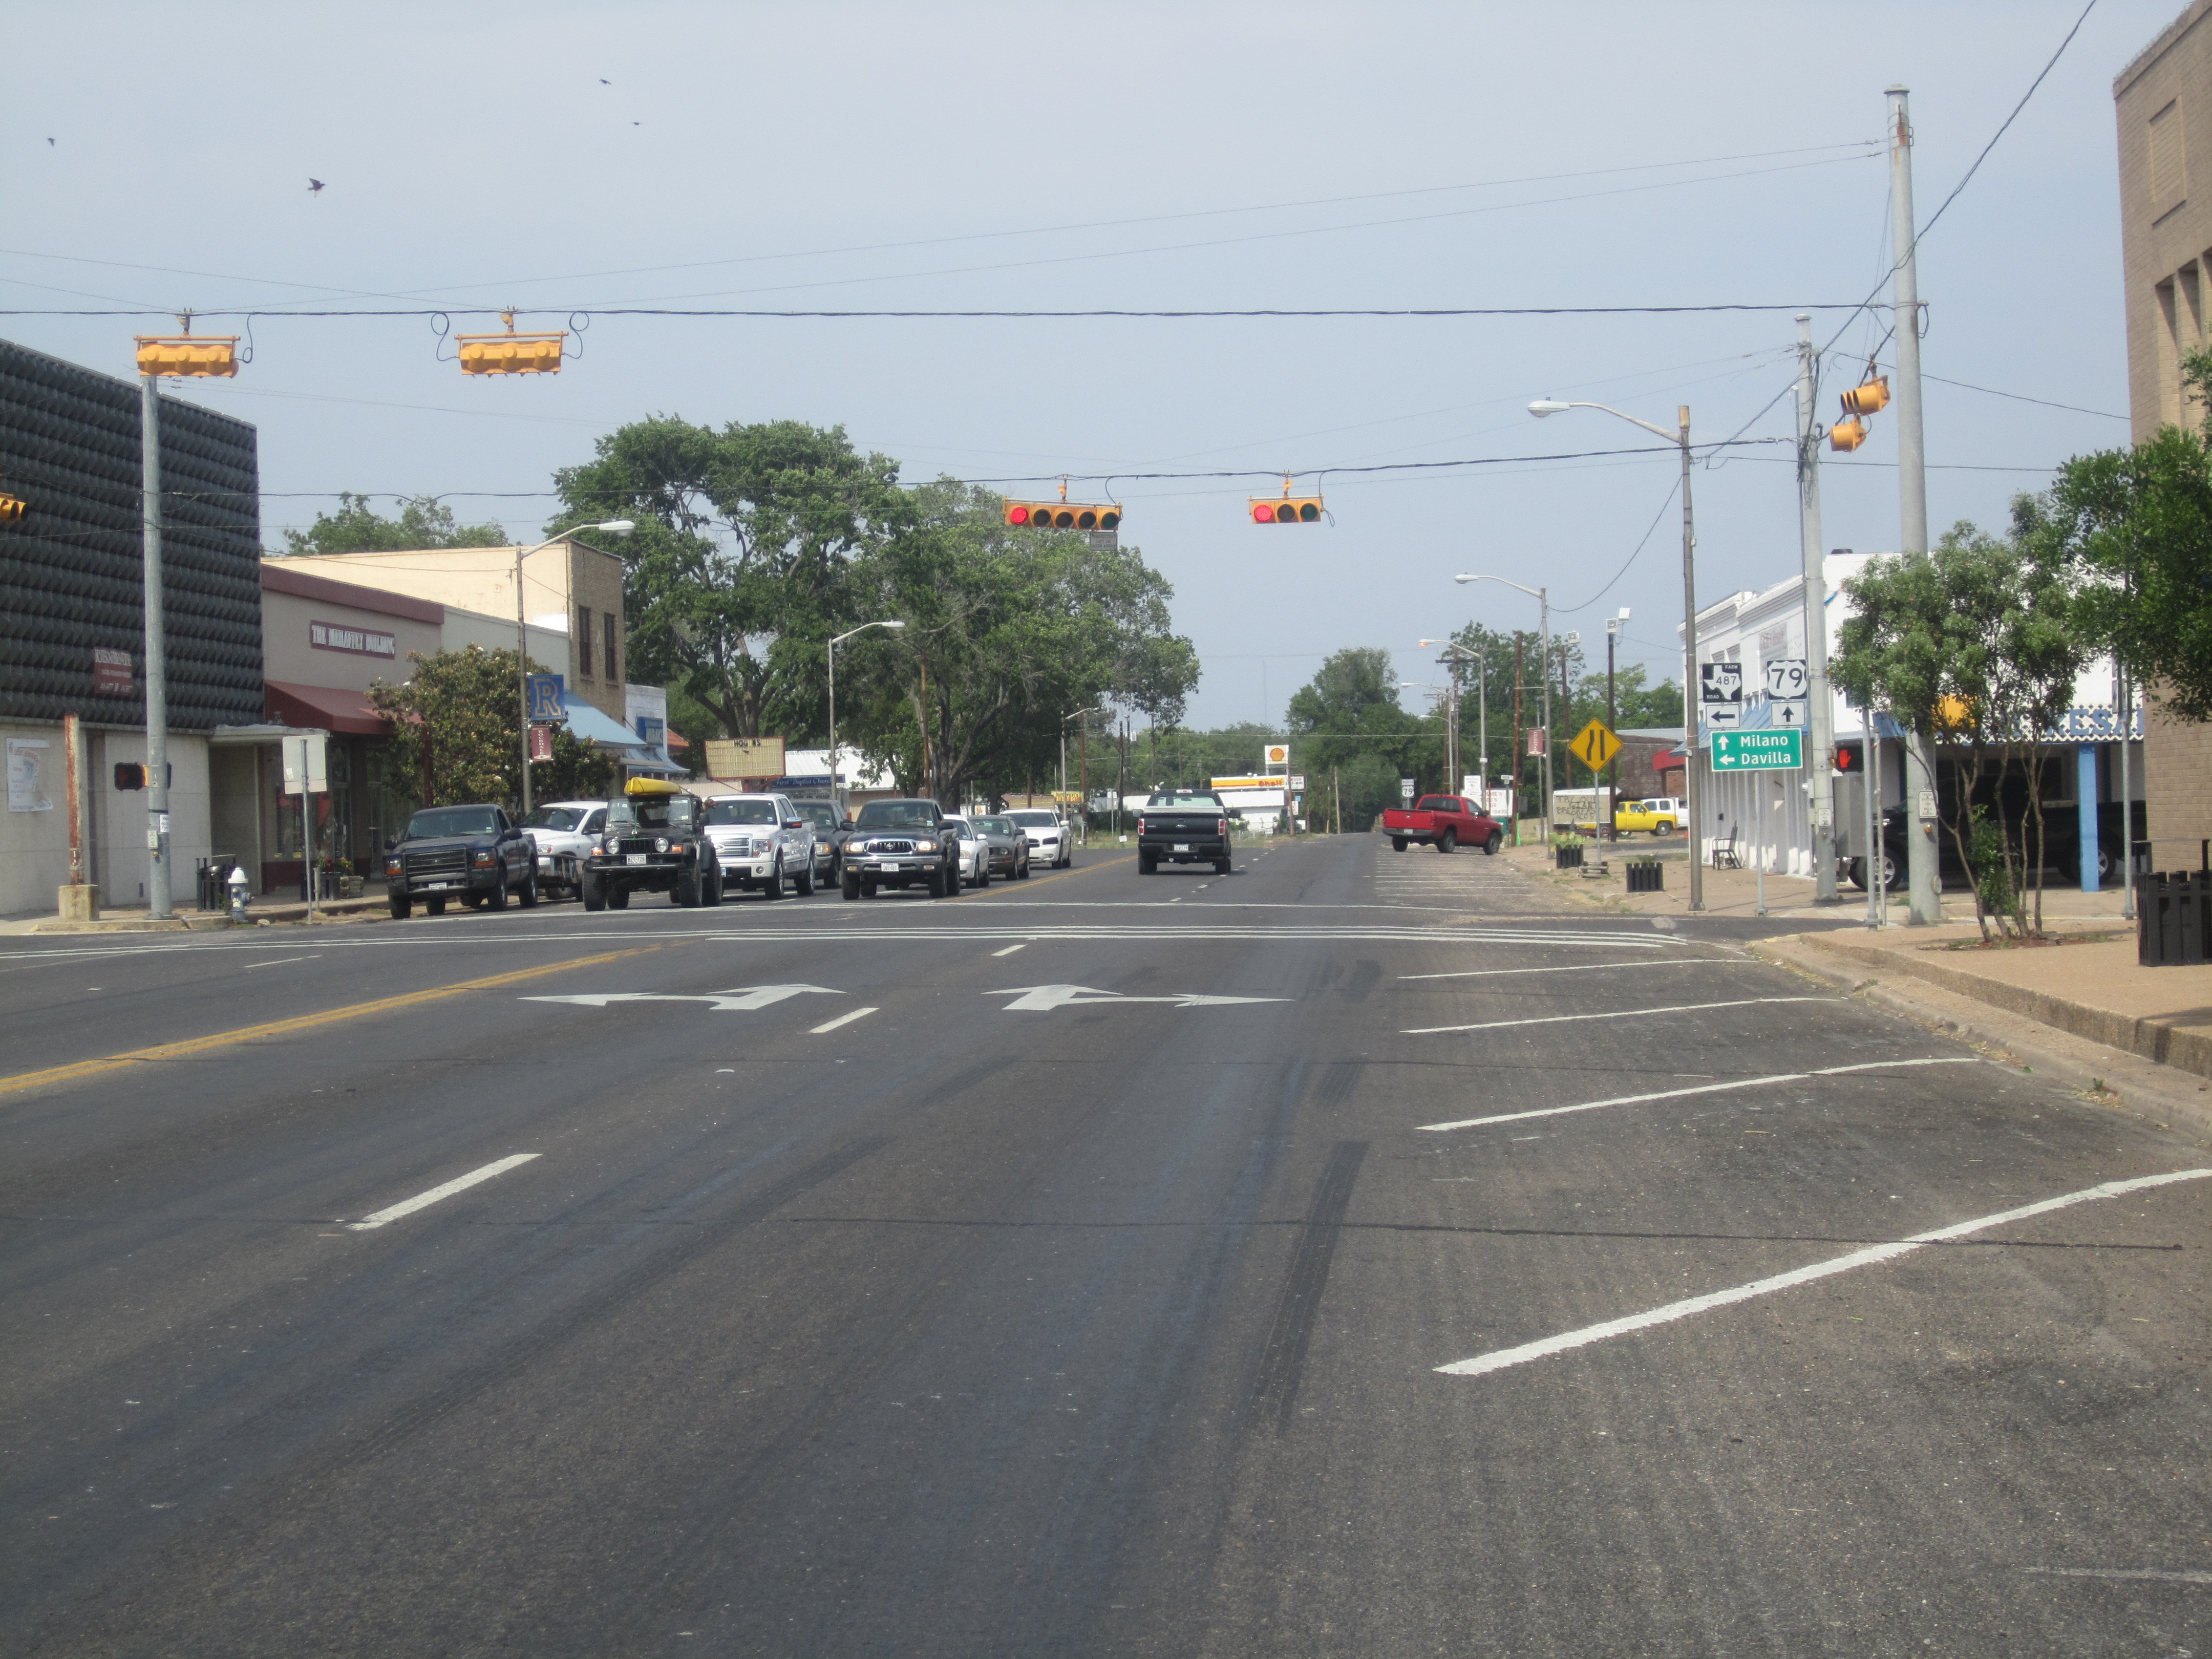 Arquivo: US Route 79 é a rua principal de Rockdale, TX IMG 2255.JPG - Wikimedia Commons